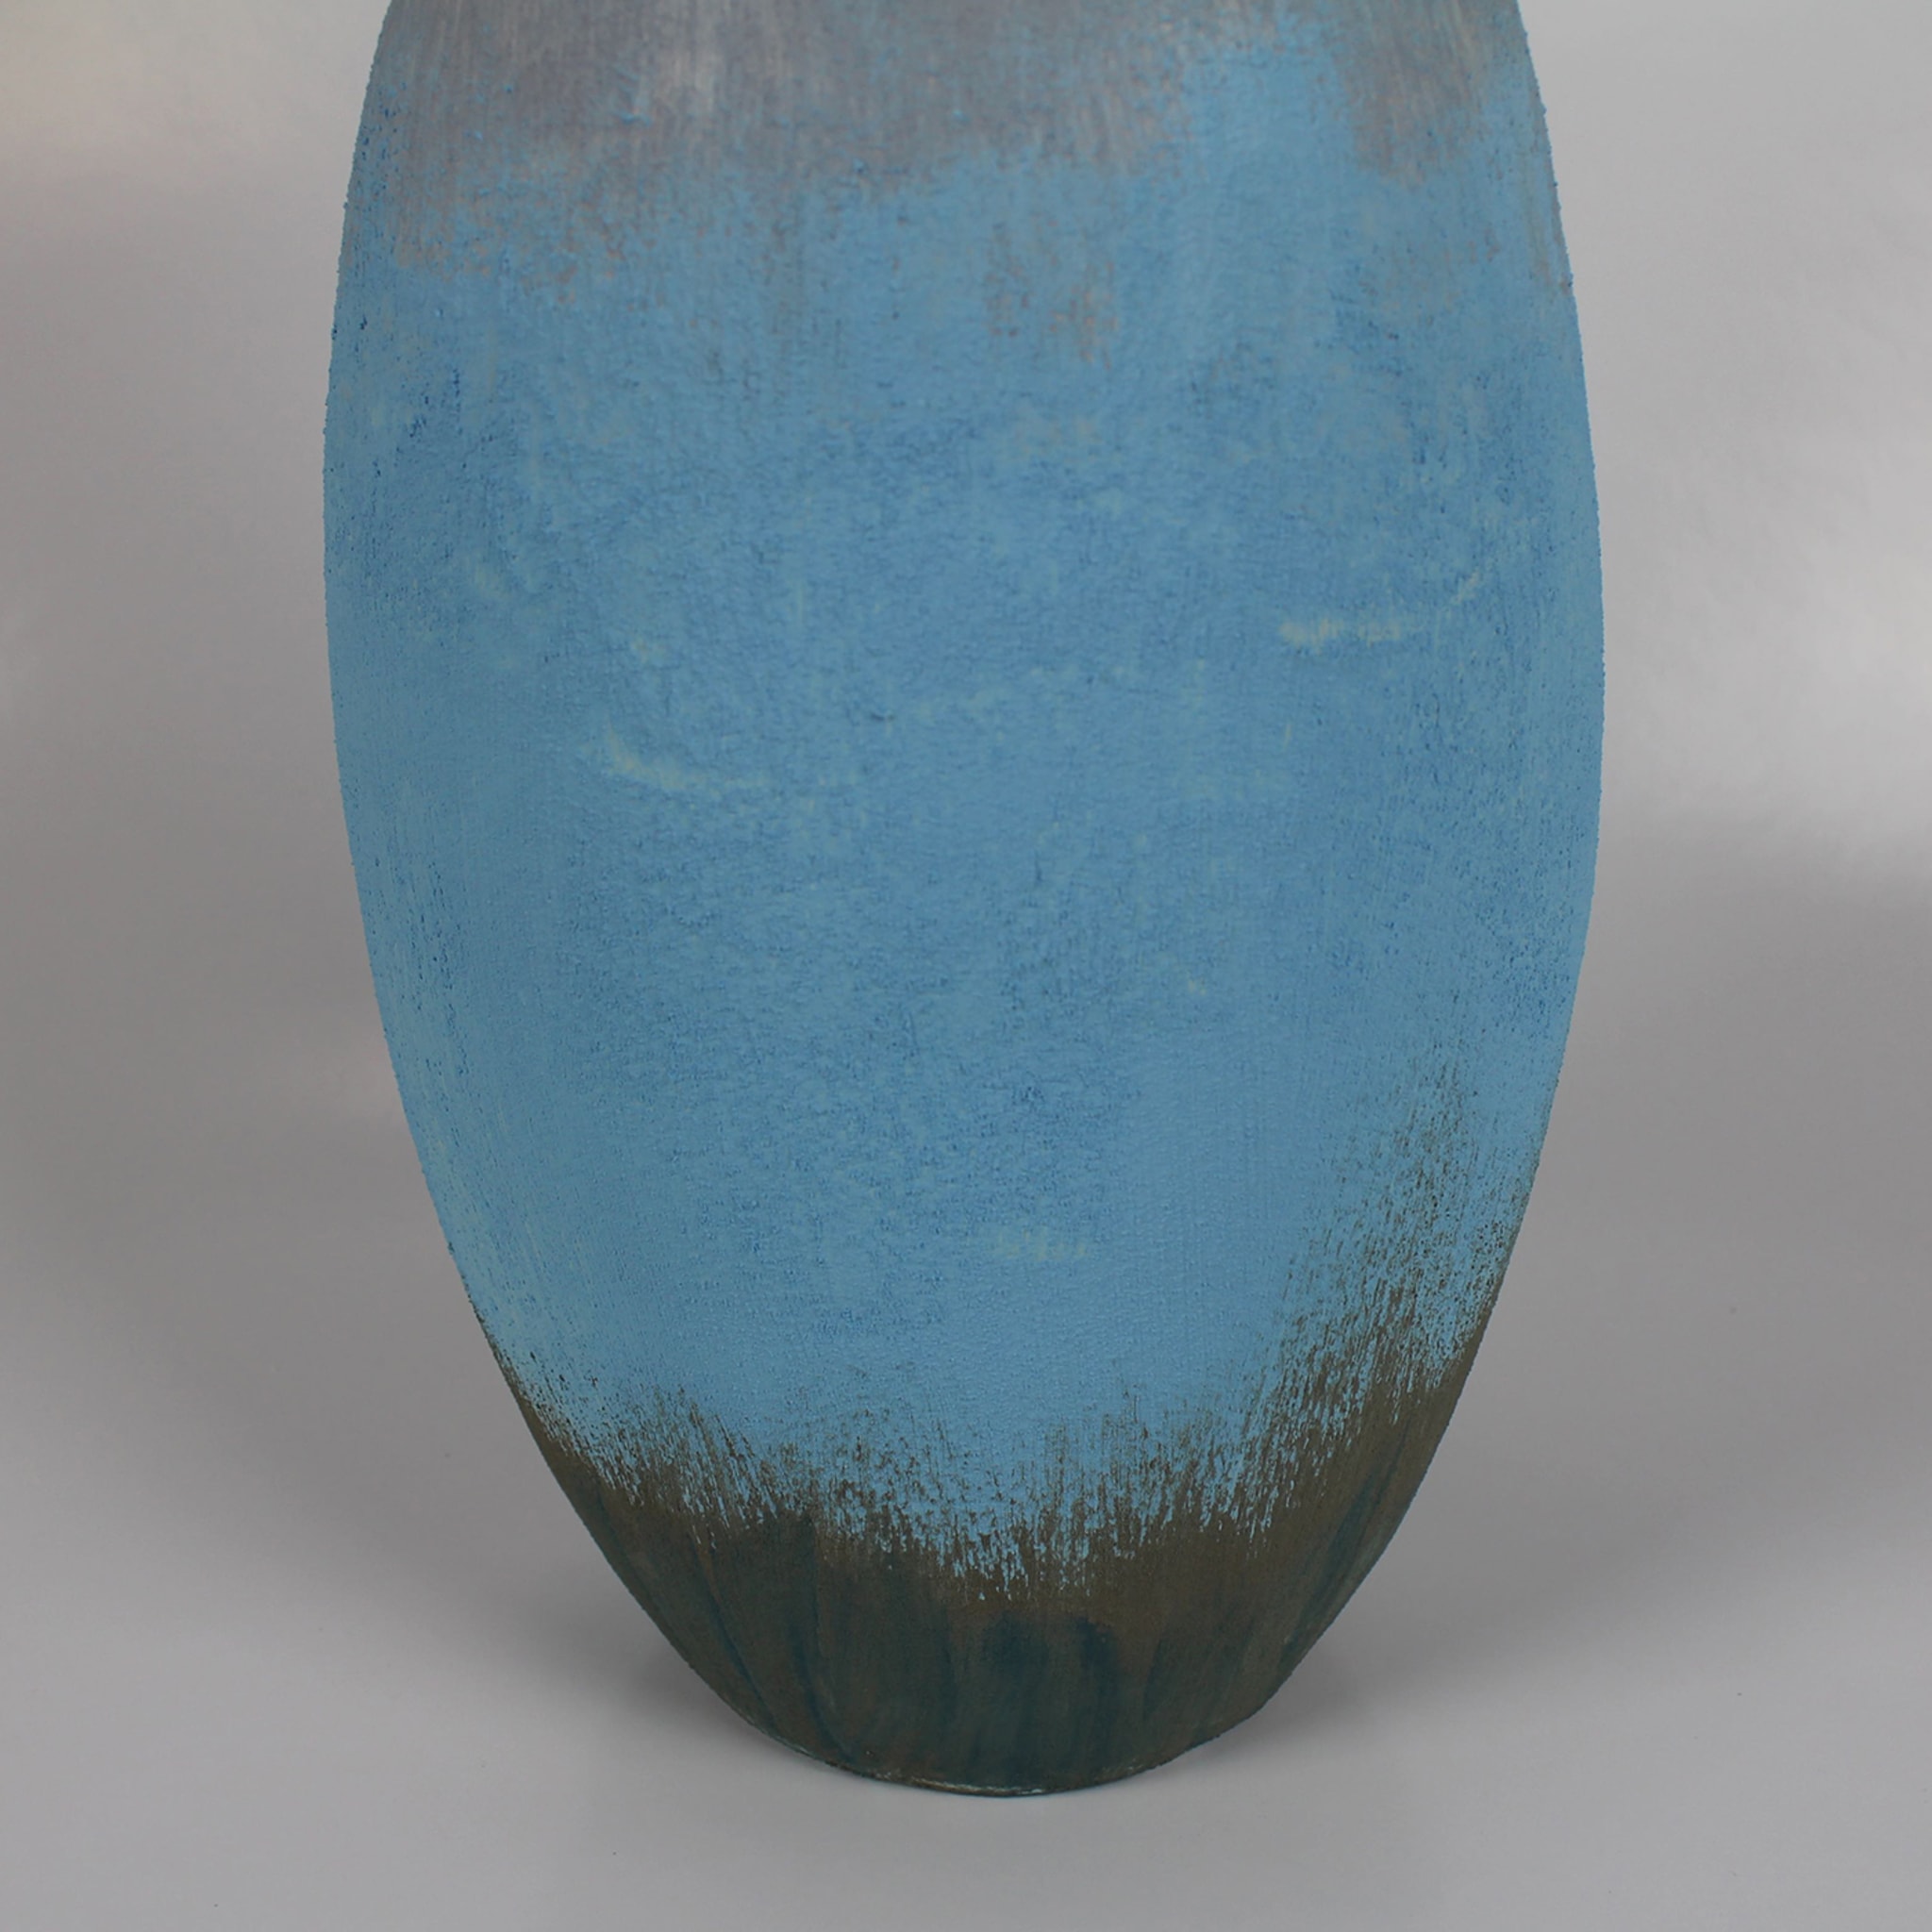 Bulging Light-Blue, Gray, Green Vase 13 by Mascia Meccani - Alternative view 3